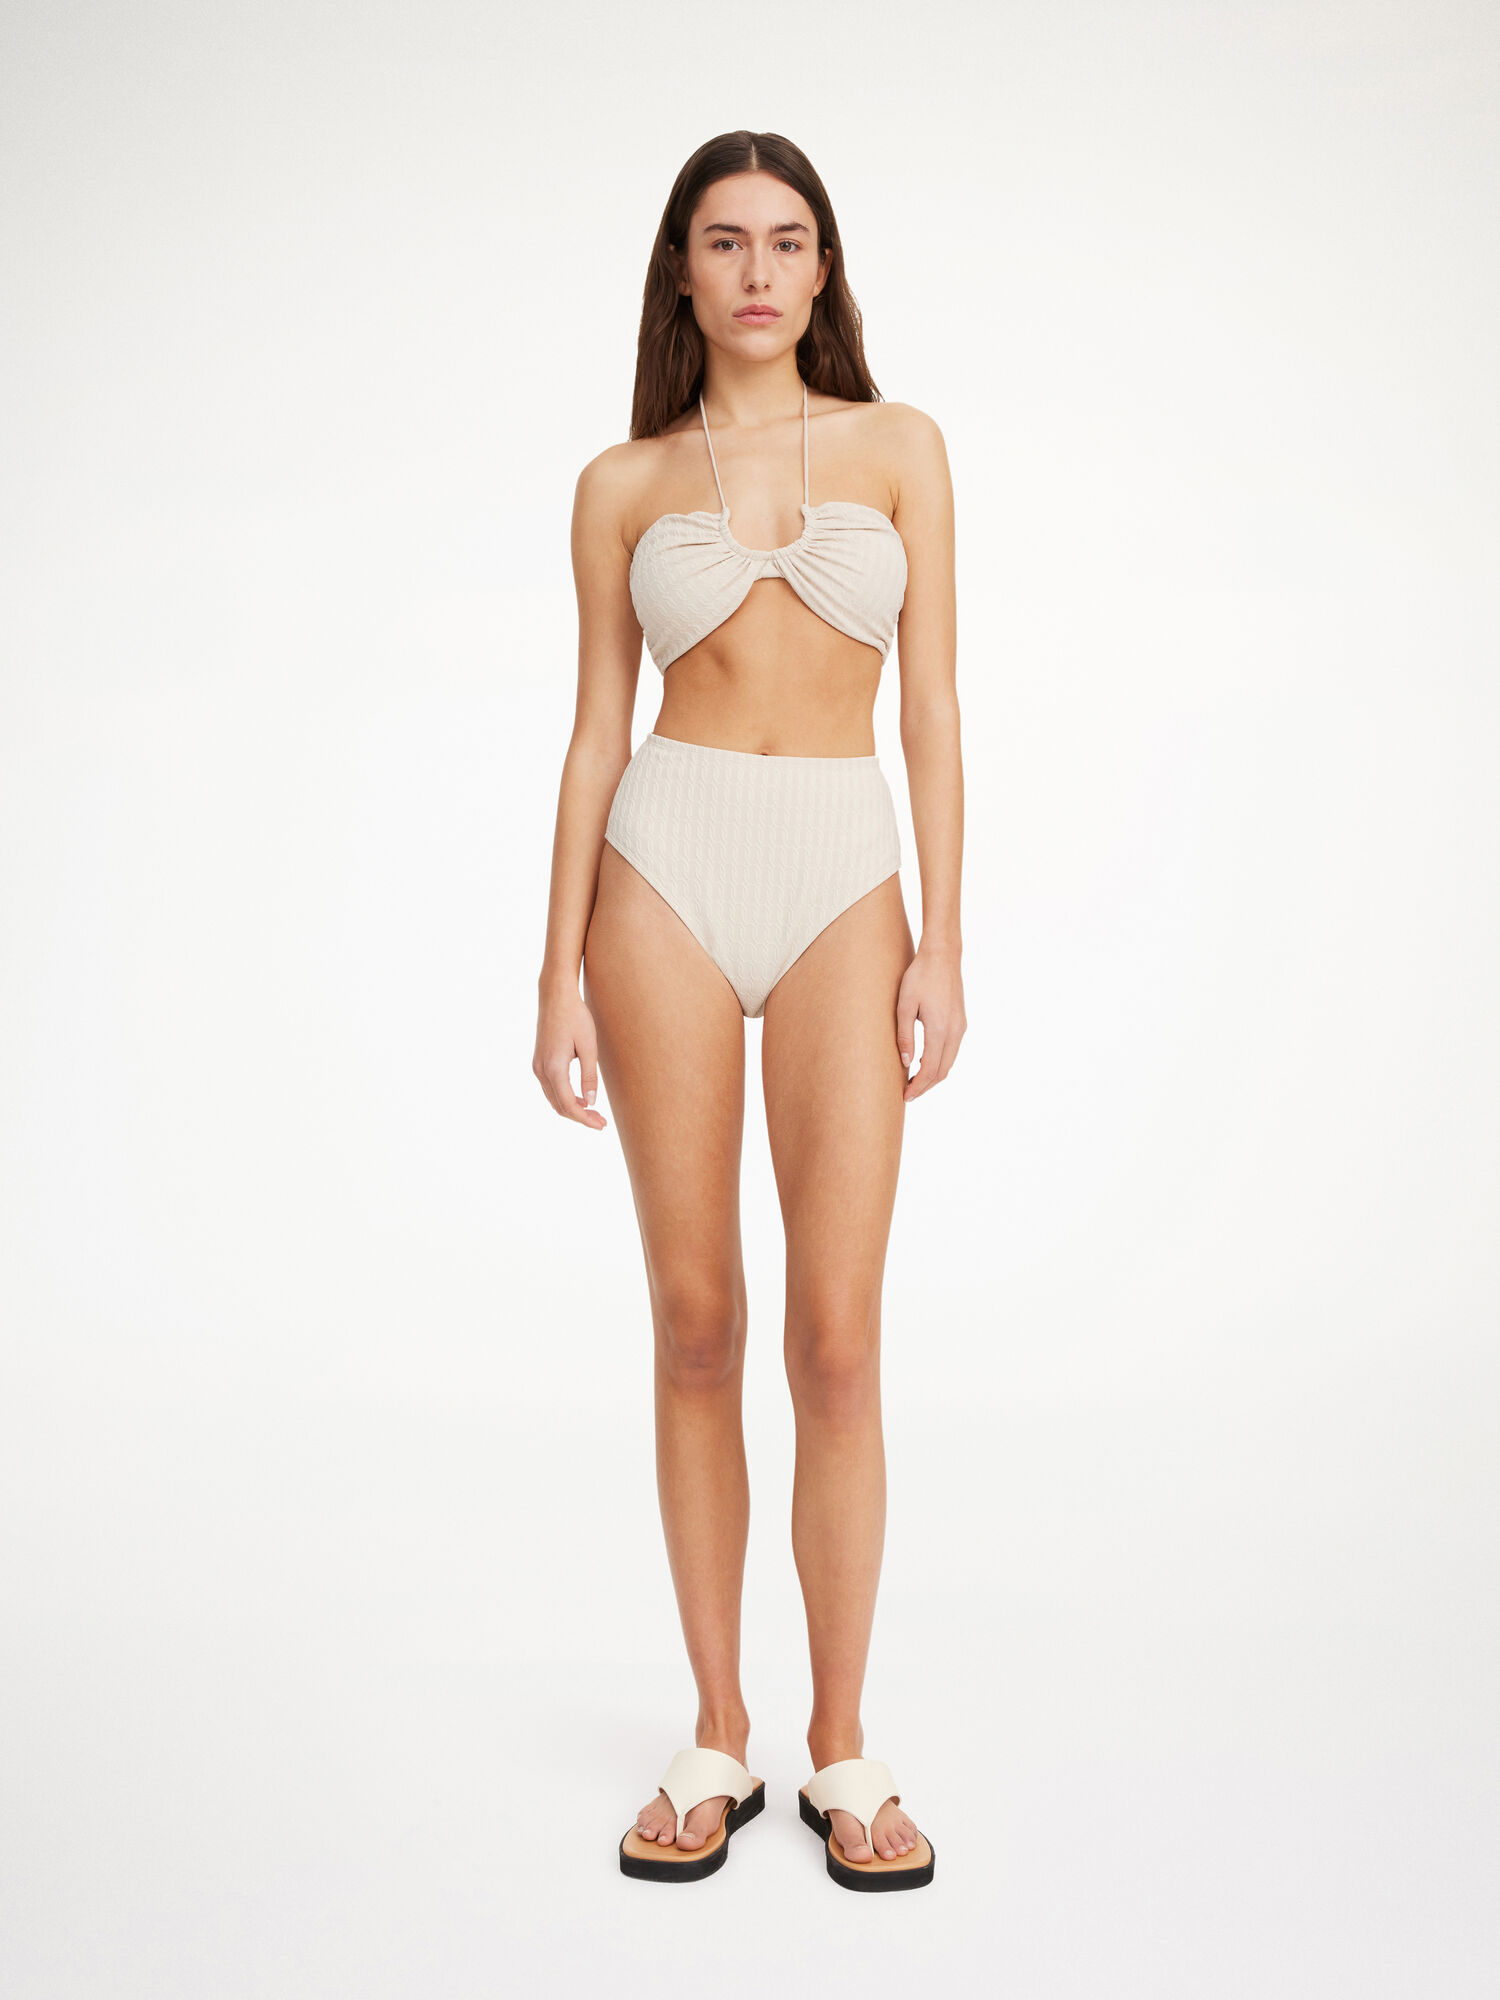 Seabay bikini top - Buy Swimwear online